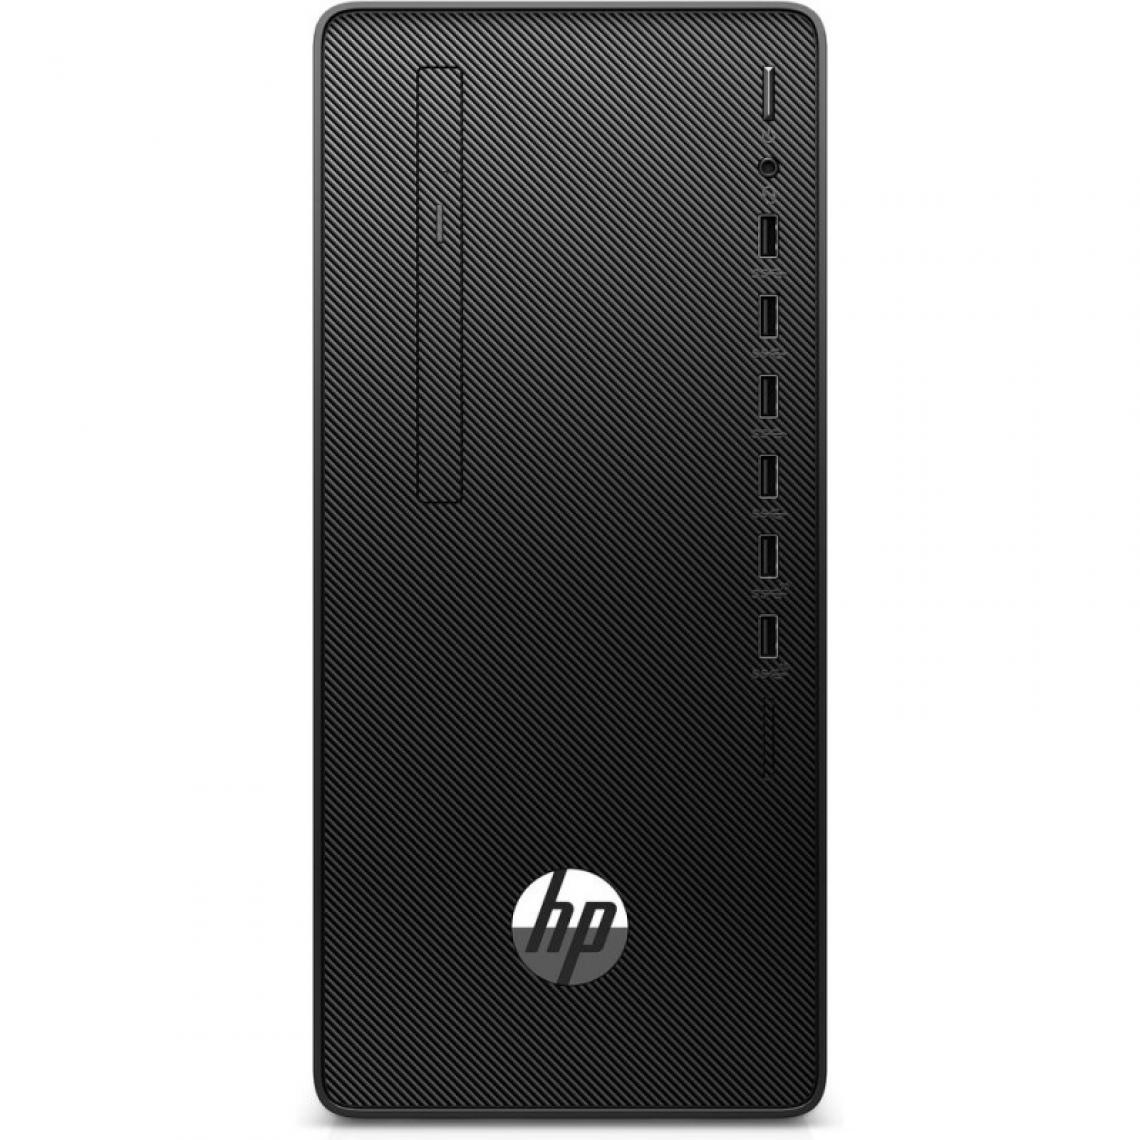 Hp - PC de bureau HP 290 G4 256 GB SSD 8 GB DDR4 Intel® Core™ i3-10100 - PC Fixe